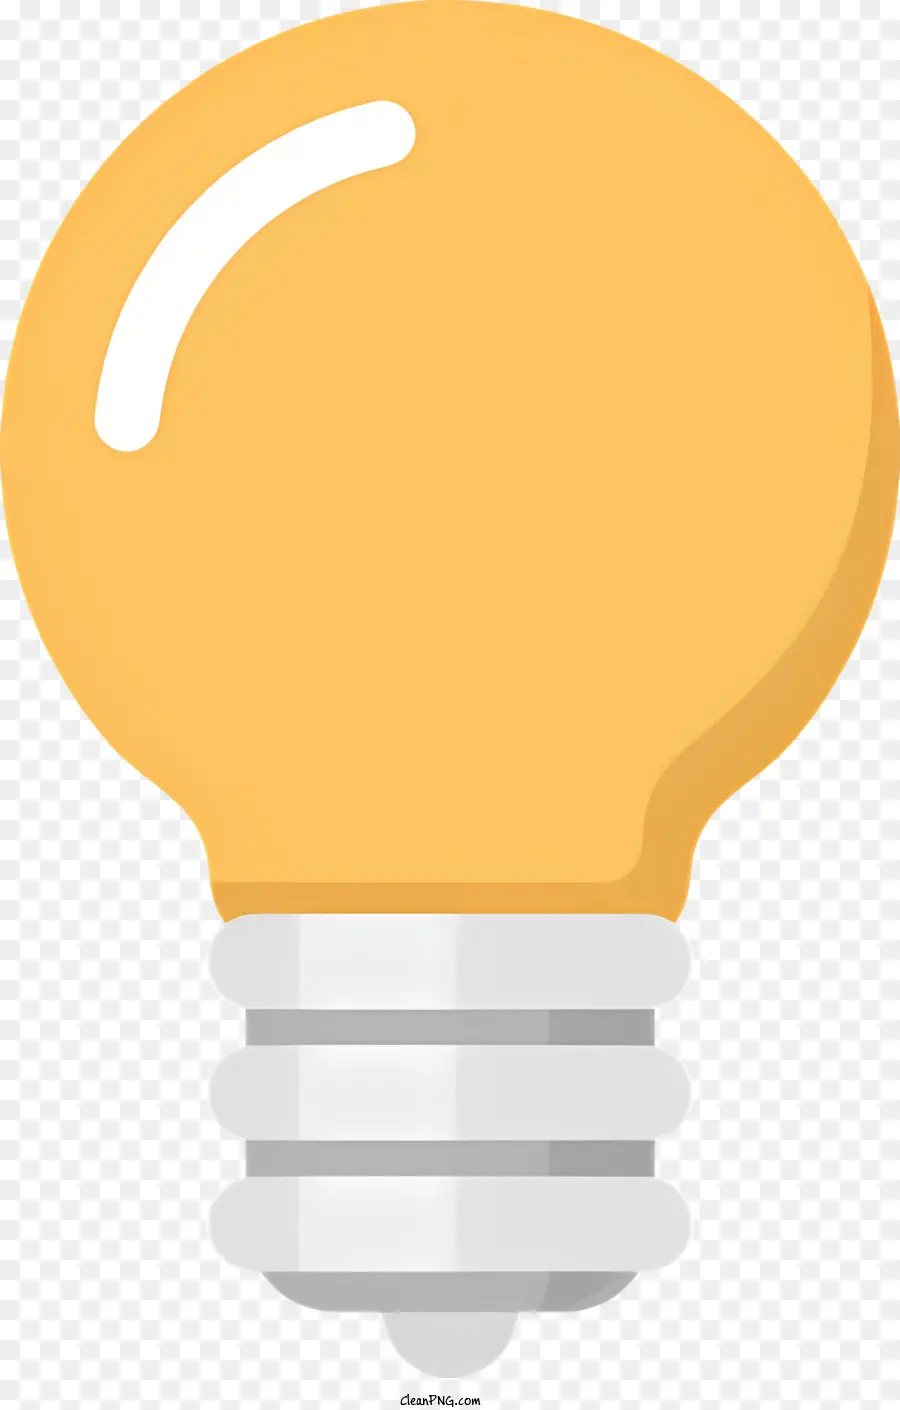 lampadina - Lampadina elettrica con base bianca rotonda